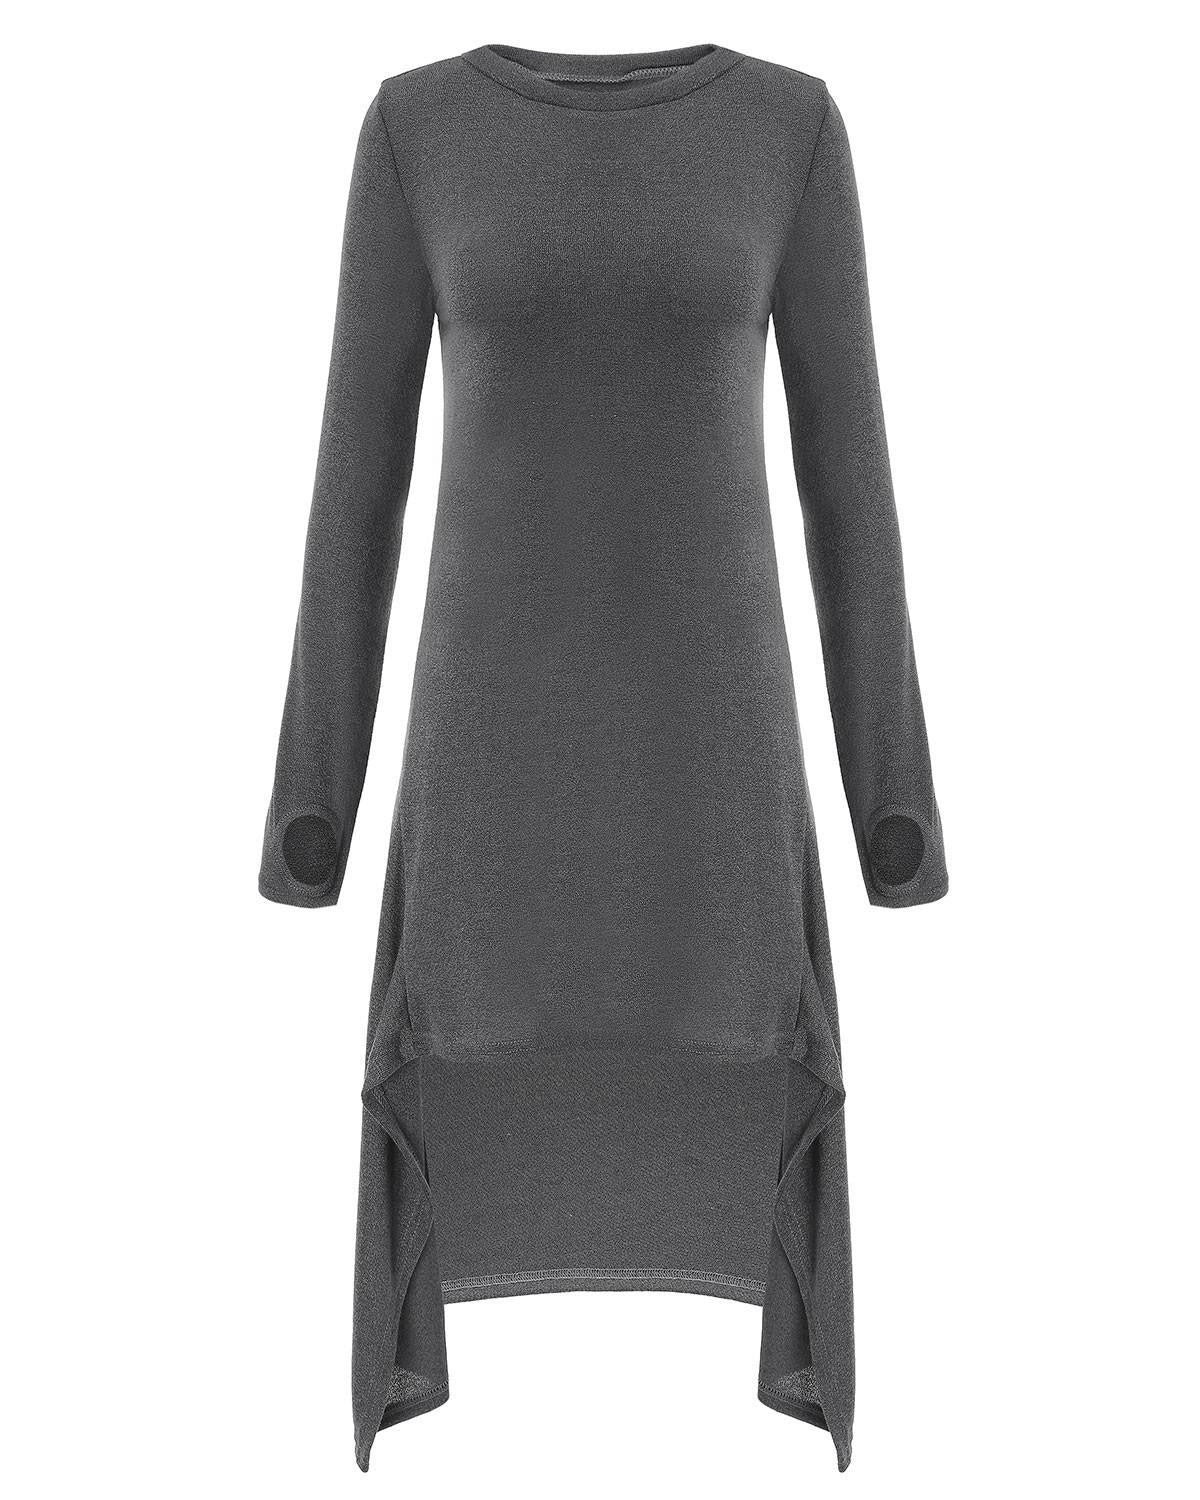 Online discount shop Australia - New Autumn Winter Women Dress Long Sleeve Knitted Sweater Dresses Fashion Irregular Hem Maxi Dress Plus Size S-3XL Vestidos